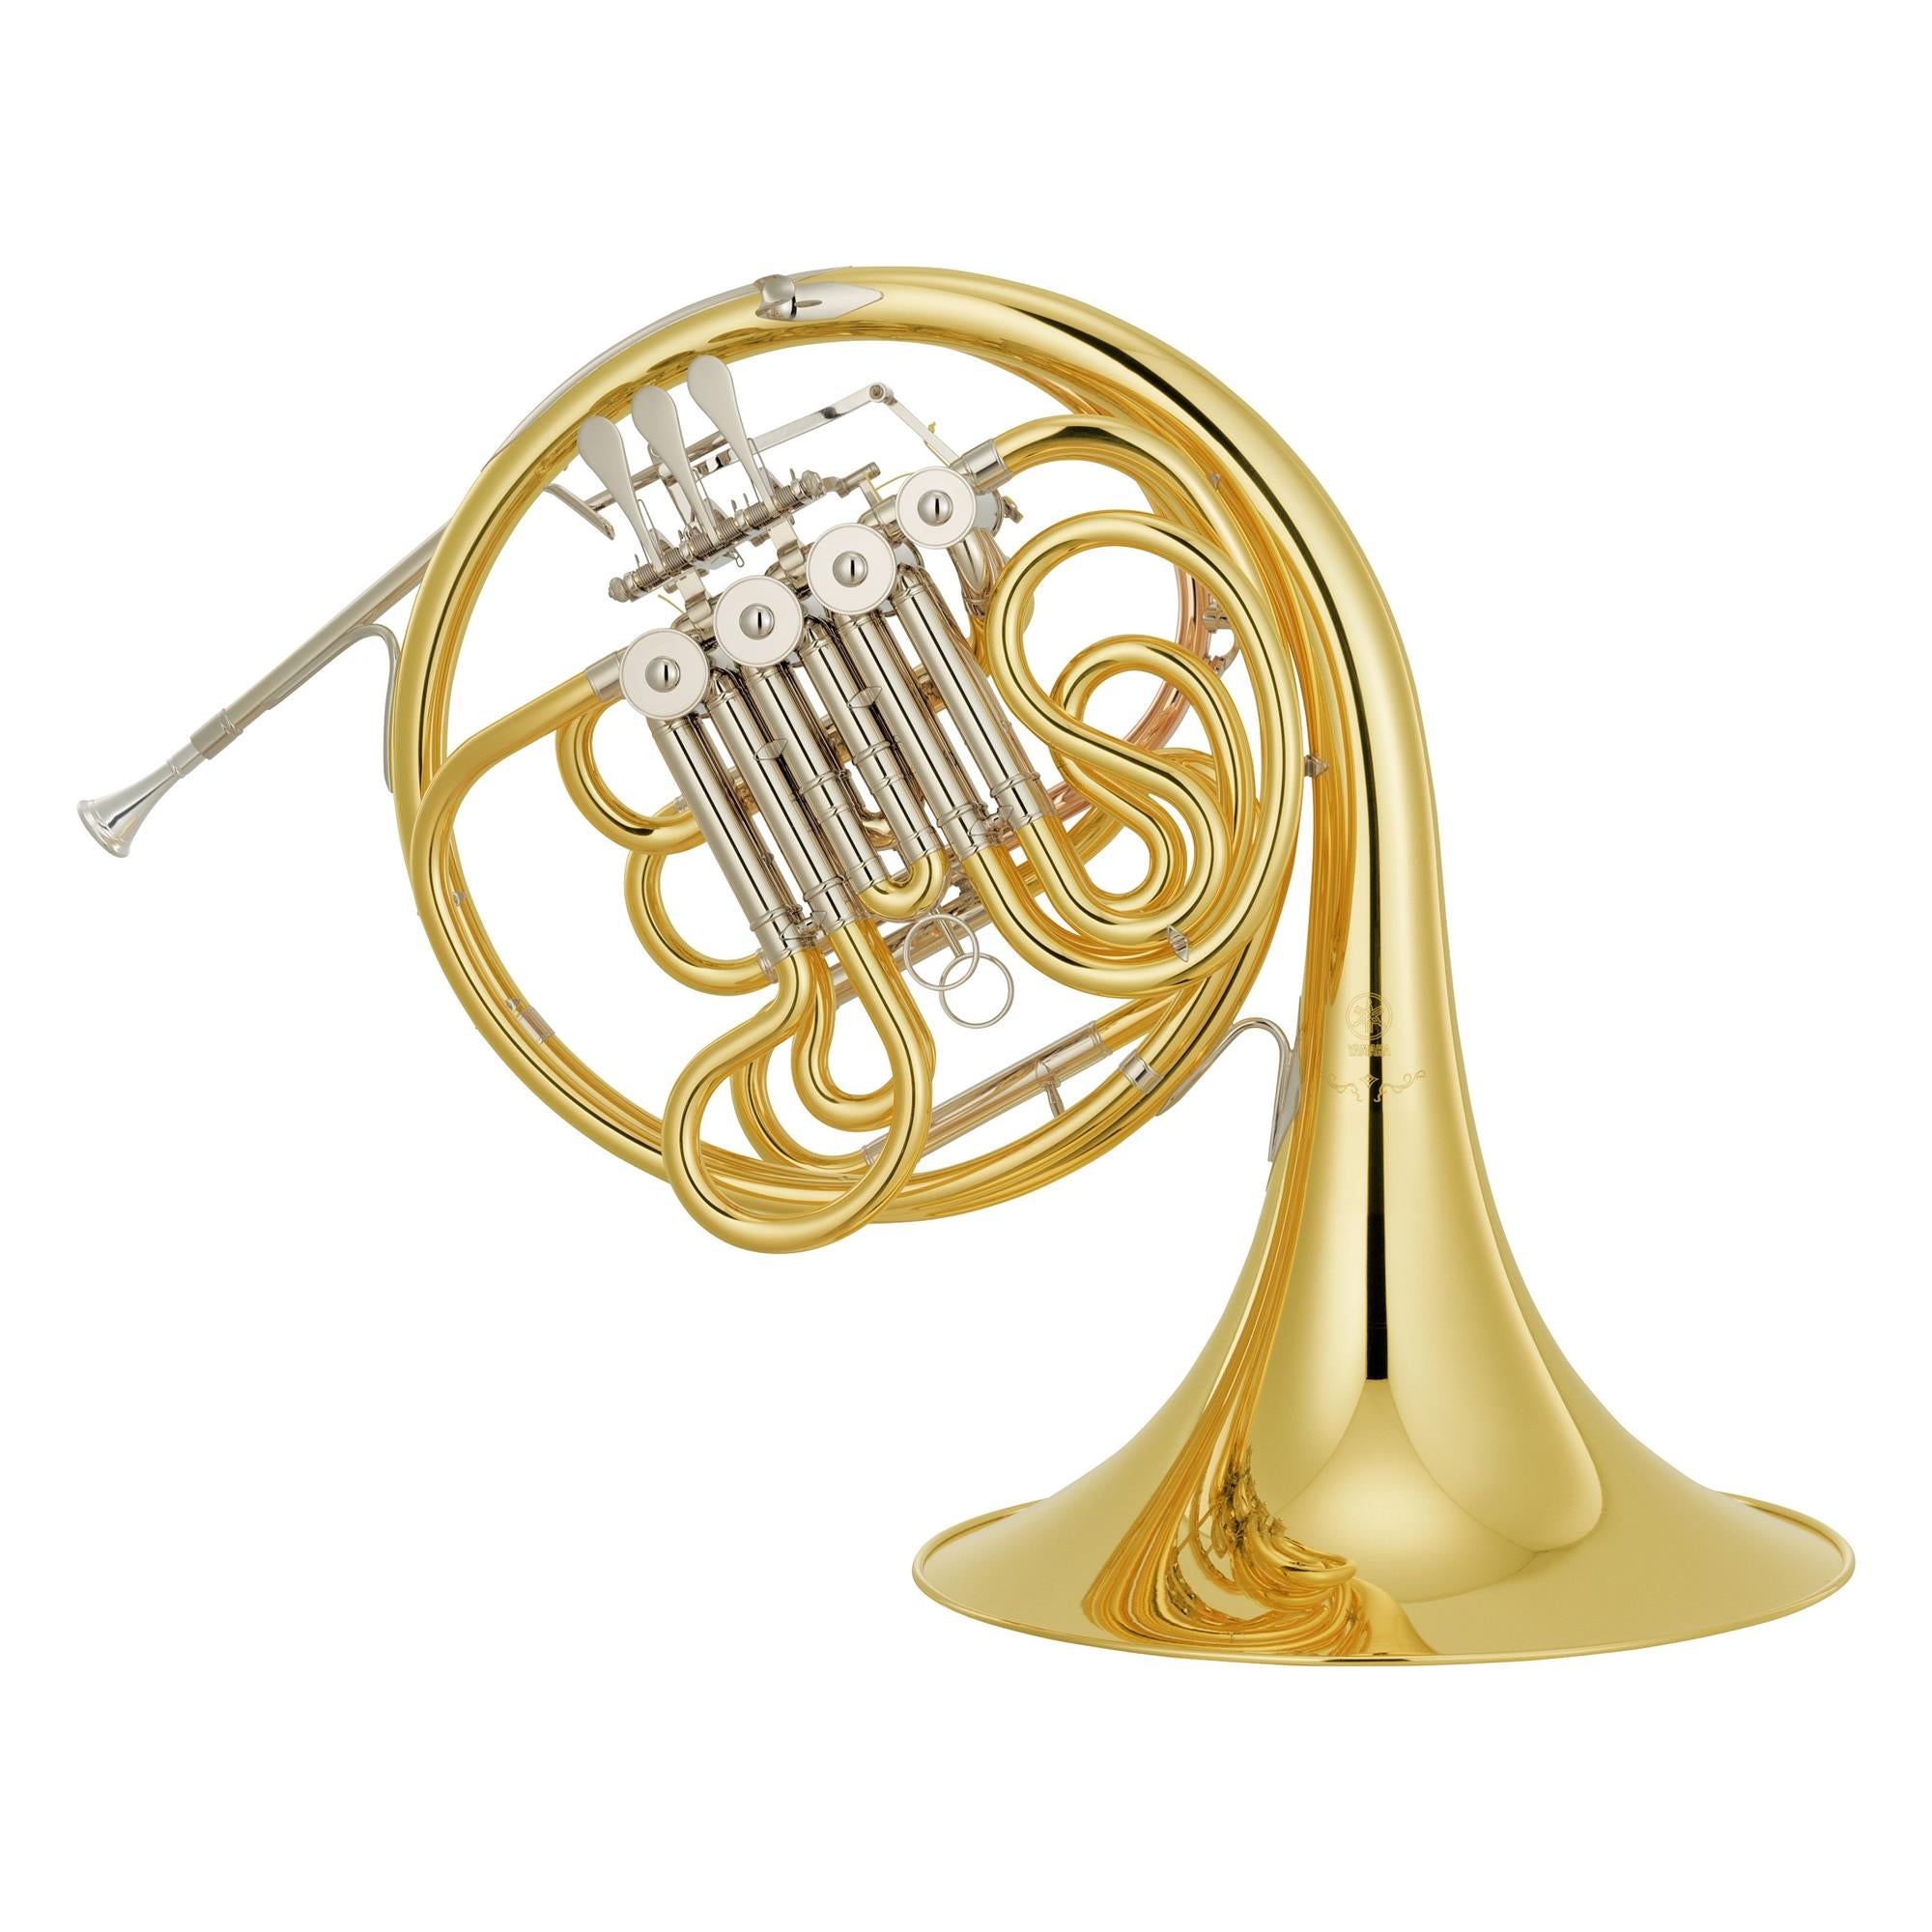 Yamaha French Horn full double